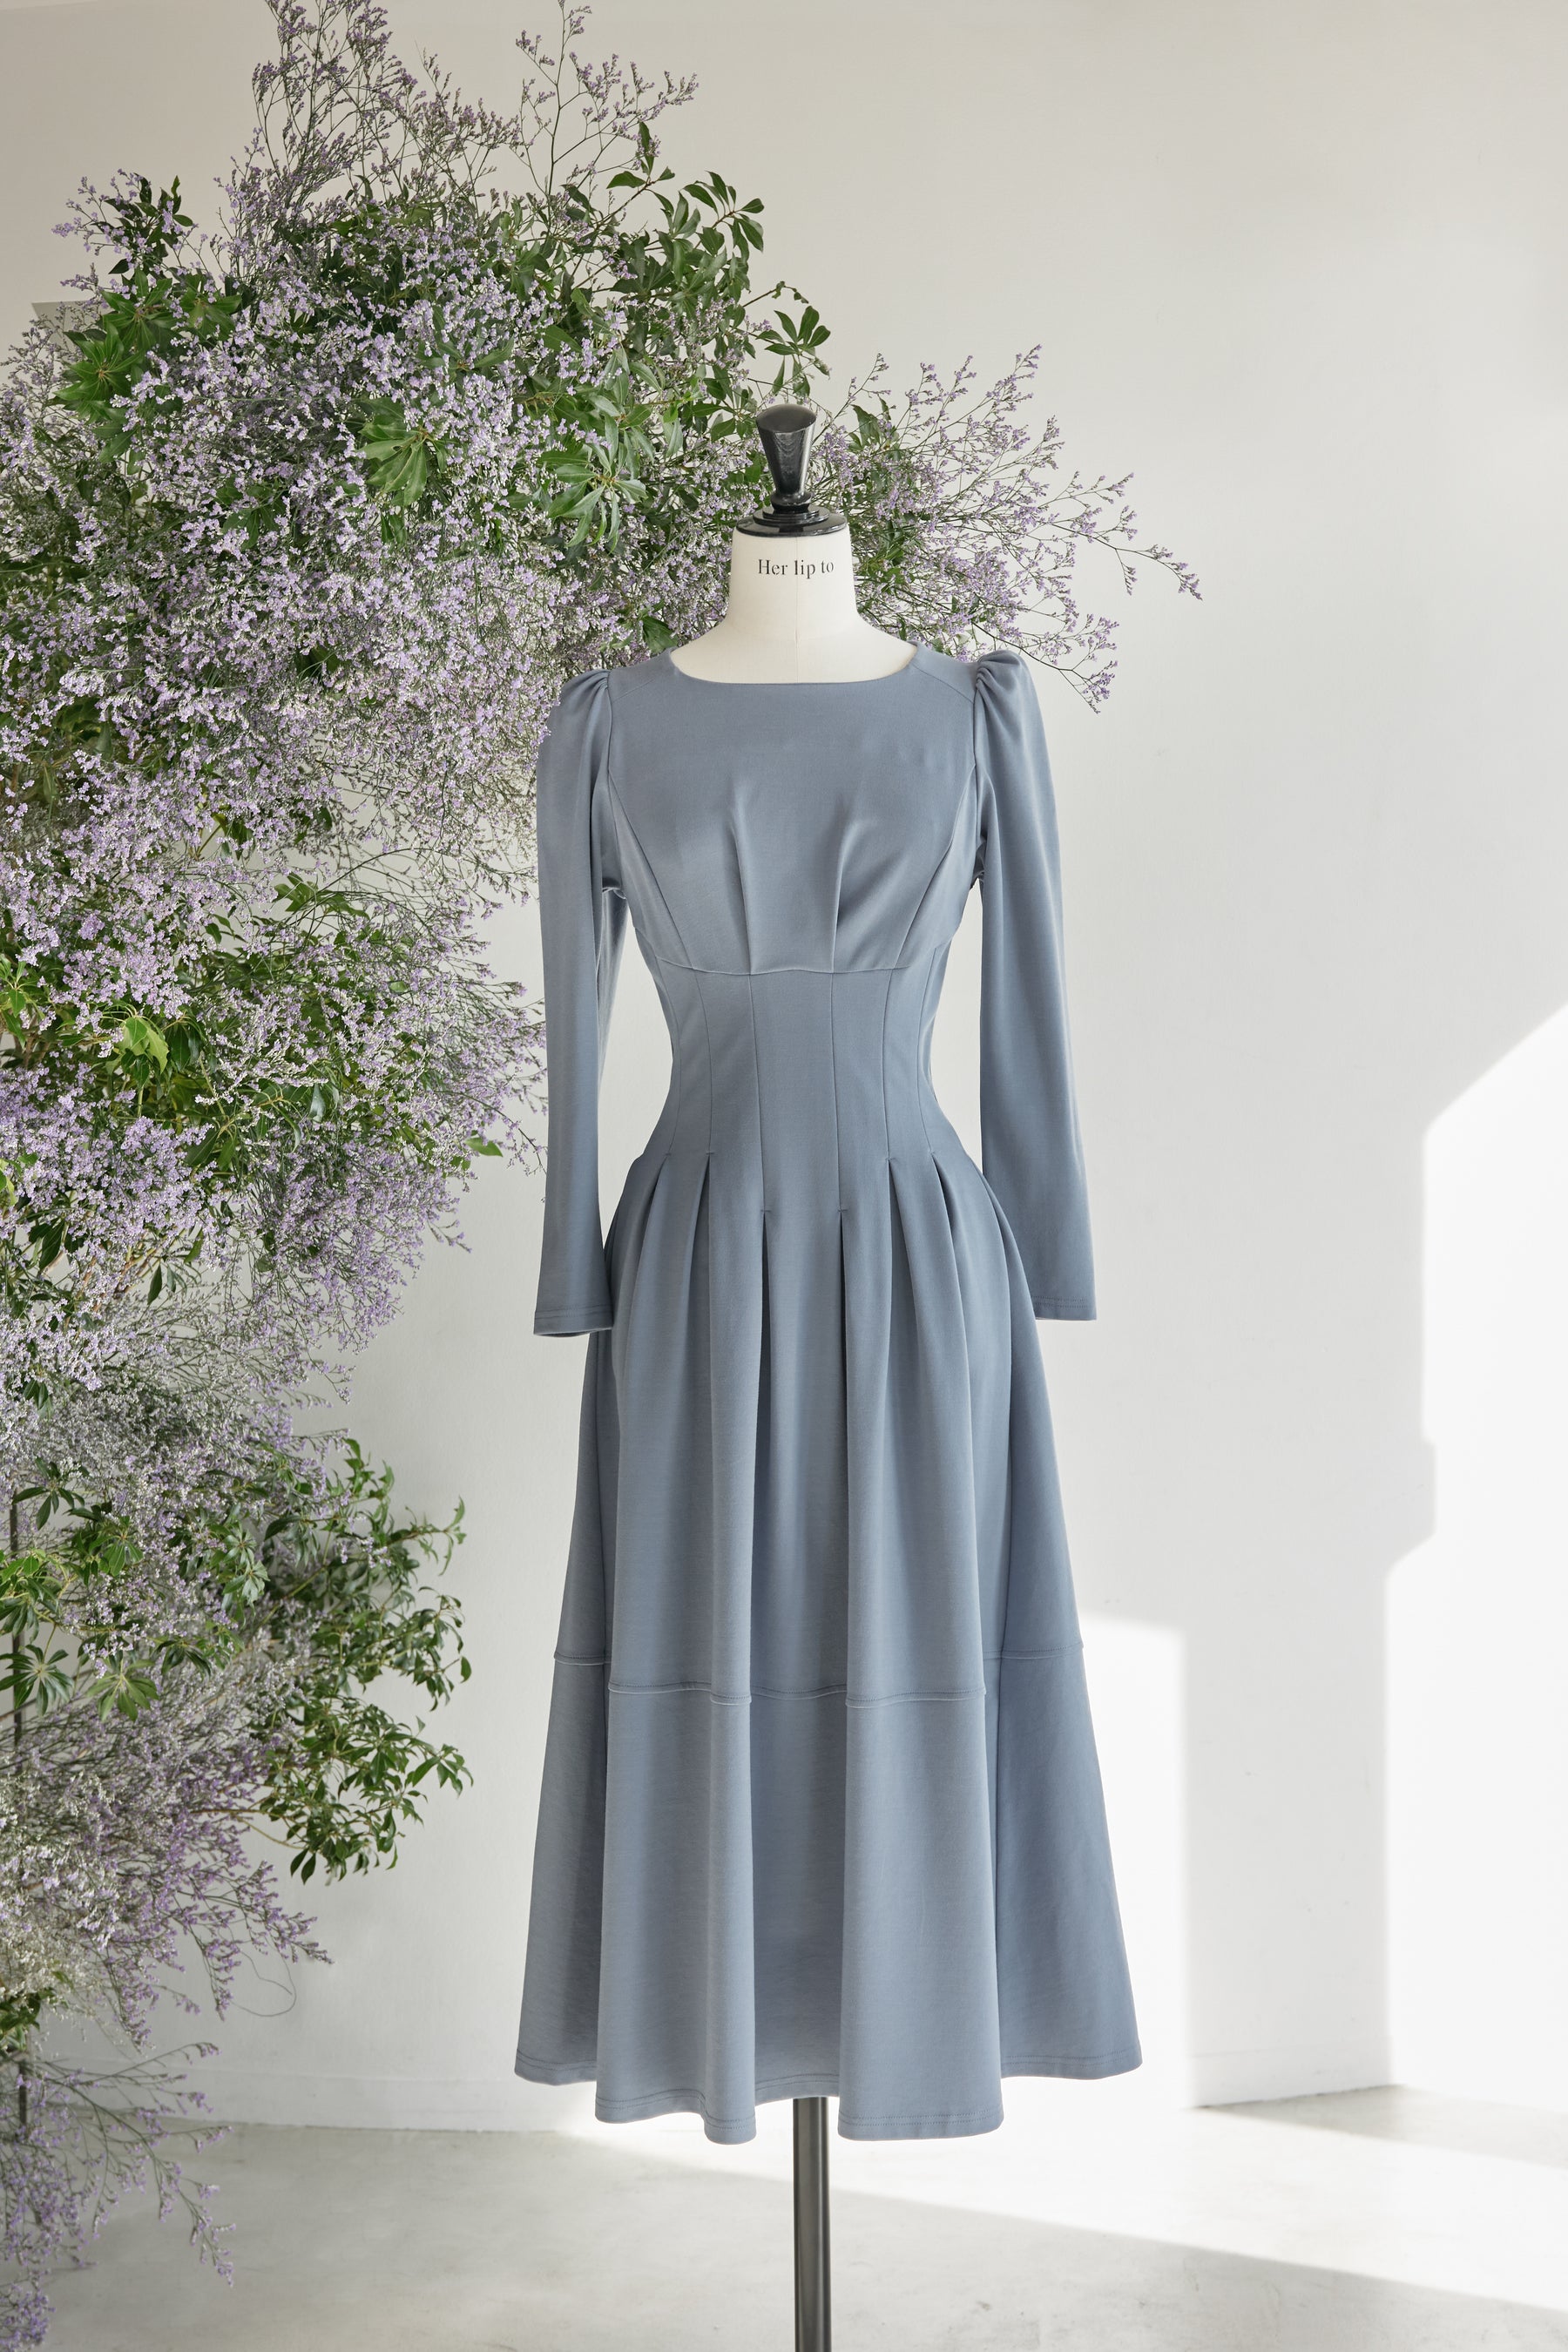 Herlipto Marylebone Long Dress sサイズ新品タグ付カラーグレー